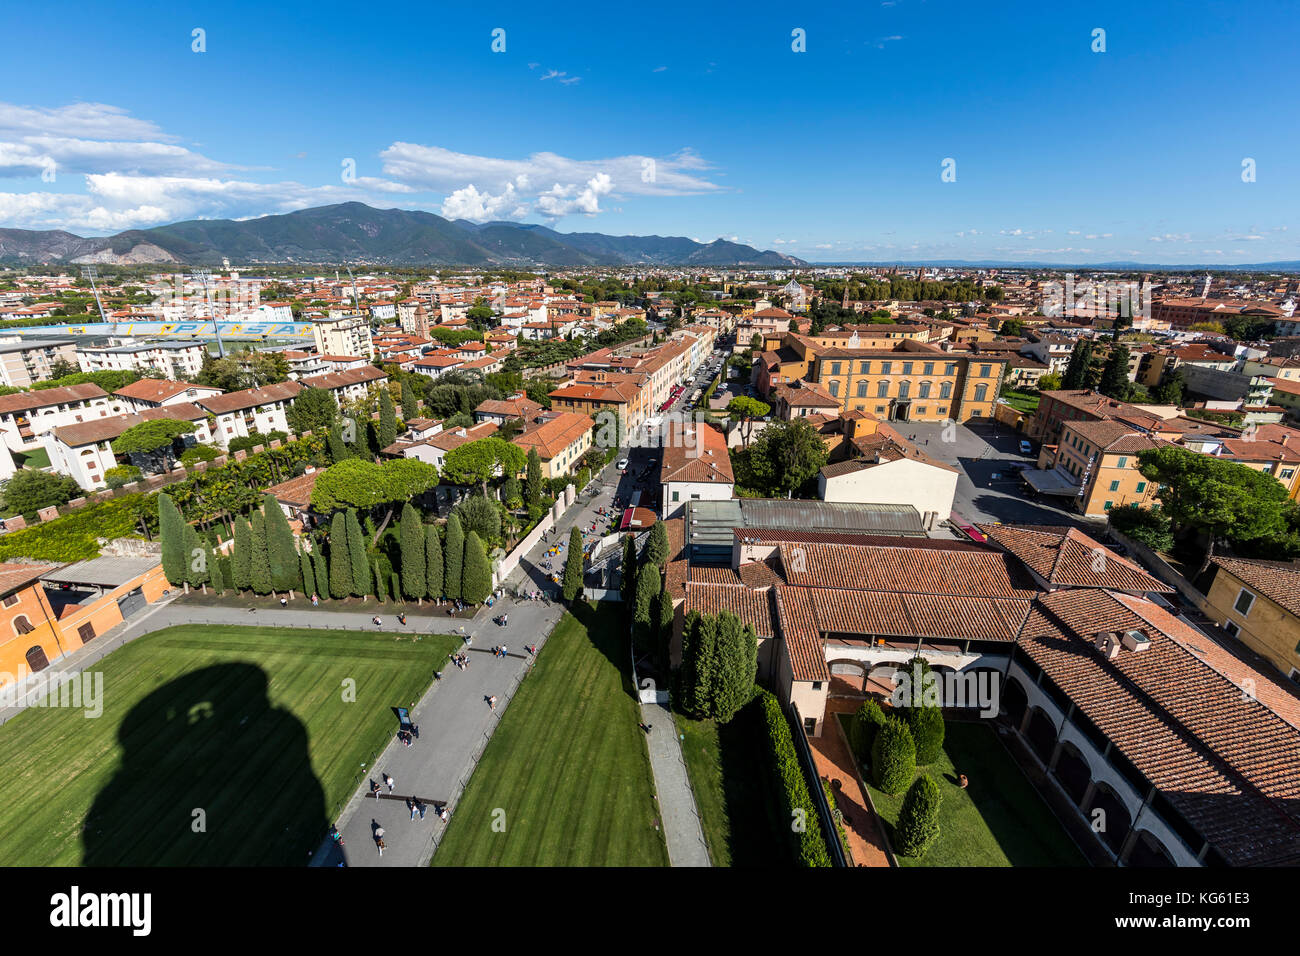 Blick vom Schiefen Turm von Pisa, Piazza dei Miracoli, Pisa, Italien. Stockfoto